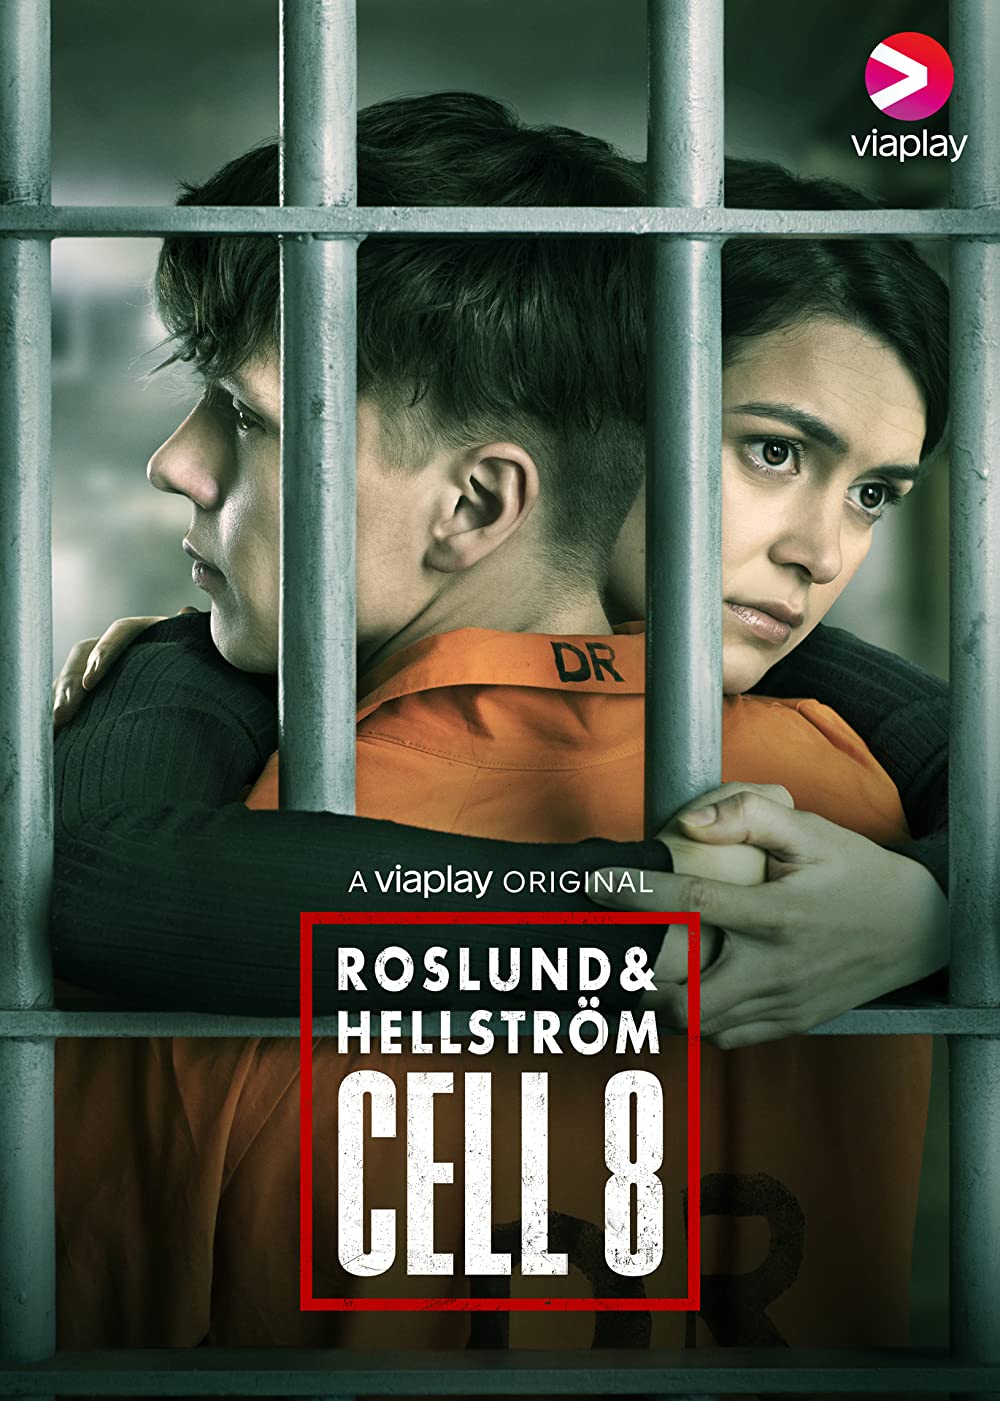 ROSLUND & HELLSTRÖM CELL 8 (2022) S01E01 1080p WEB-DL DD5.1 RETAIL NL Sub